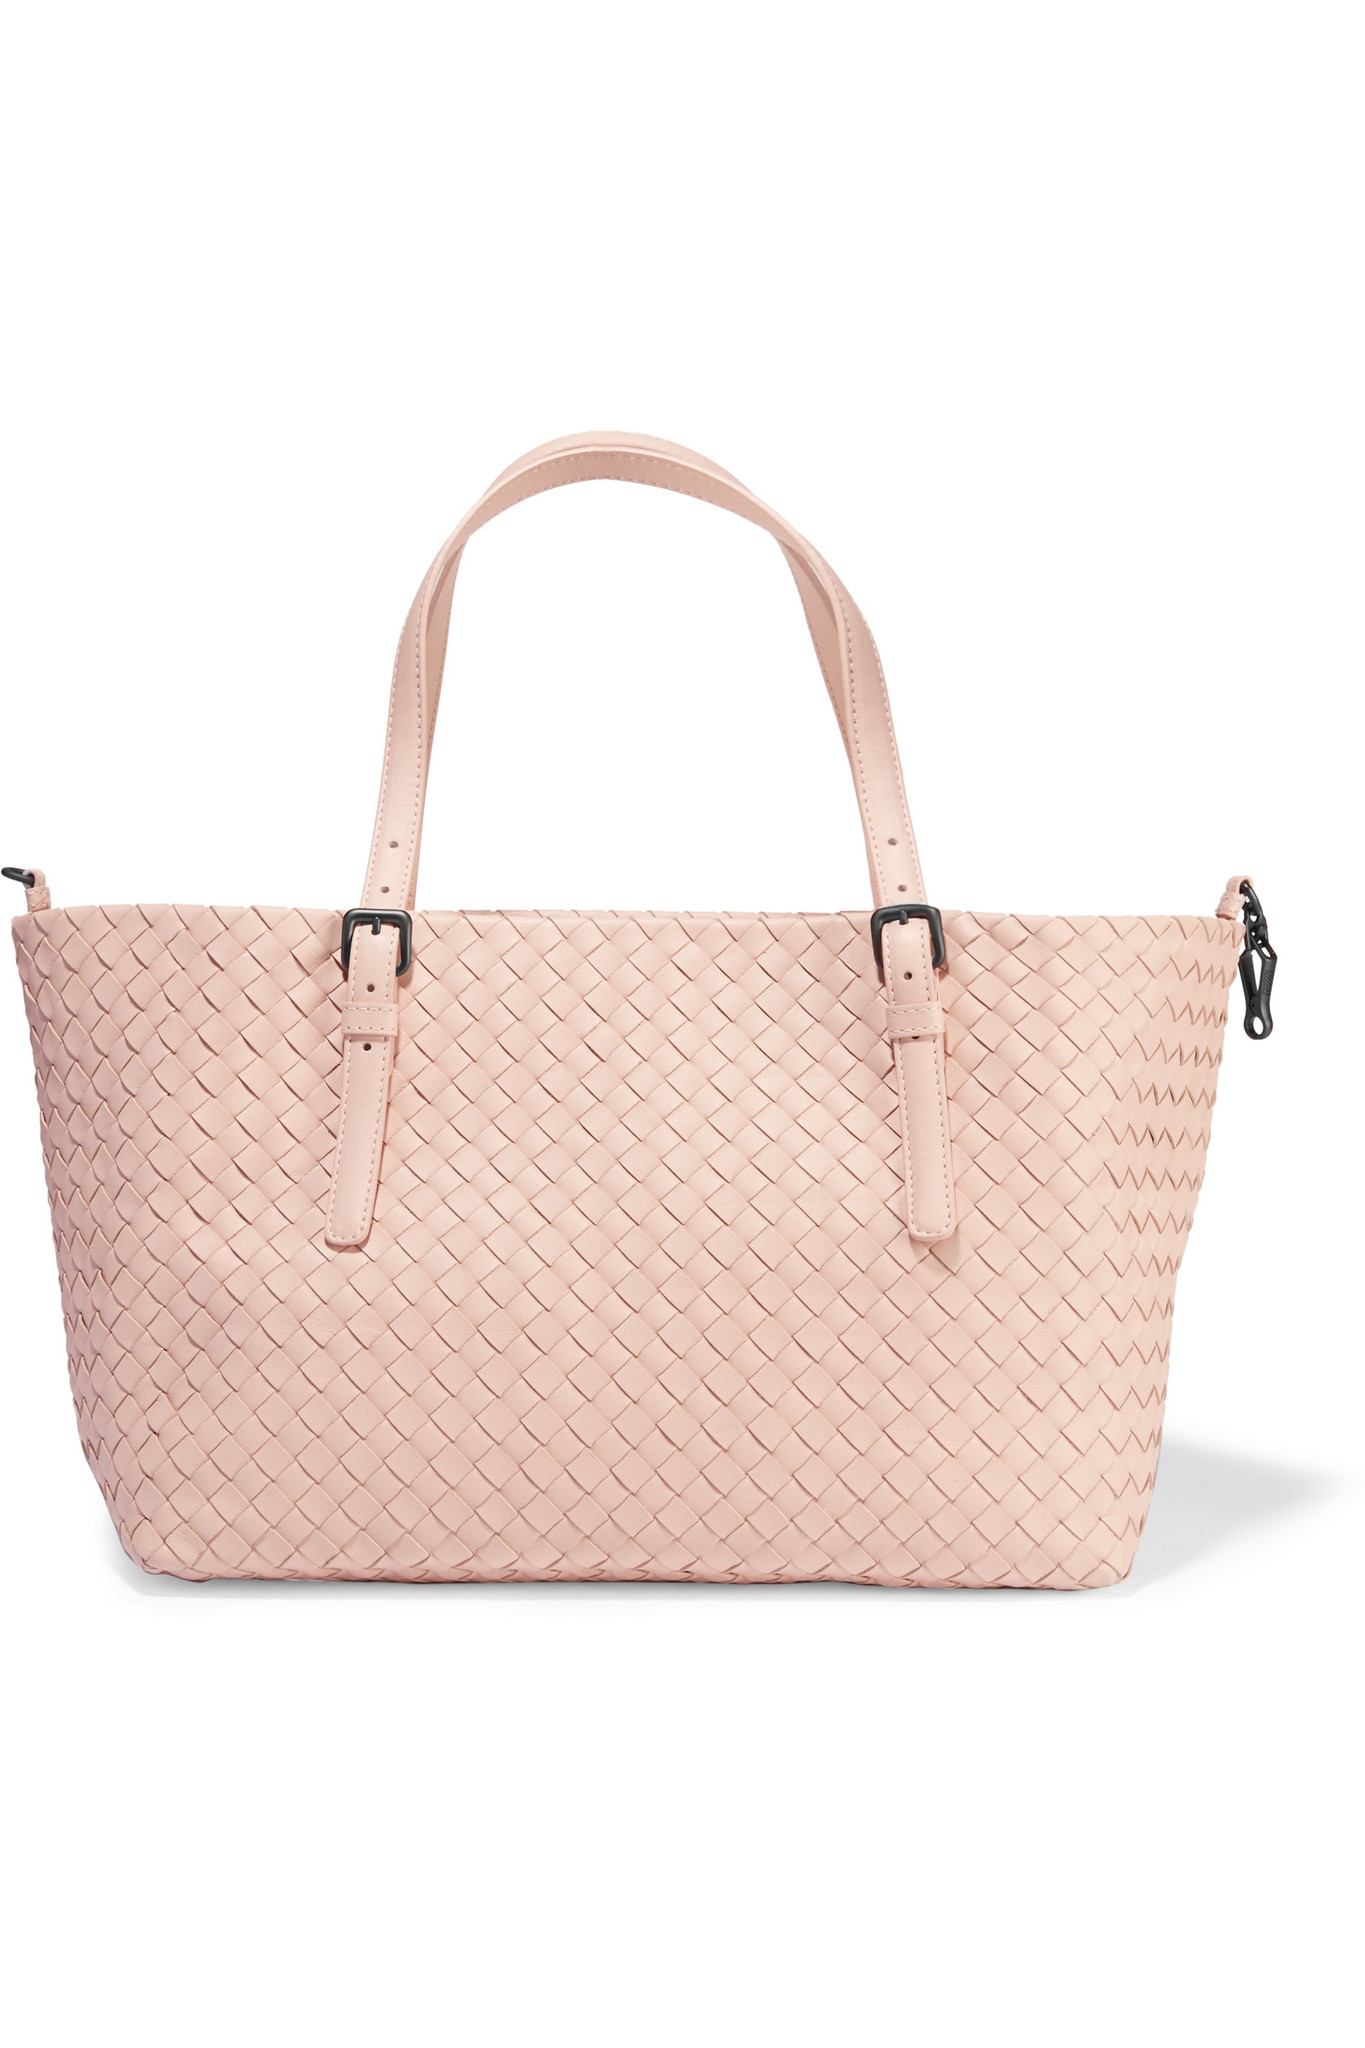 Lyst - Bottega Veneta Shopper Medium Intrecciato Leather Tote in Pink